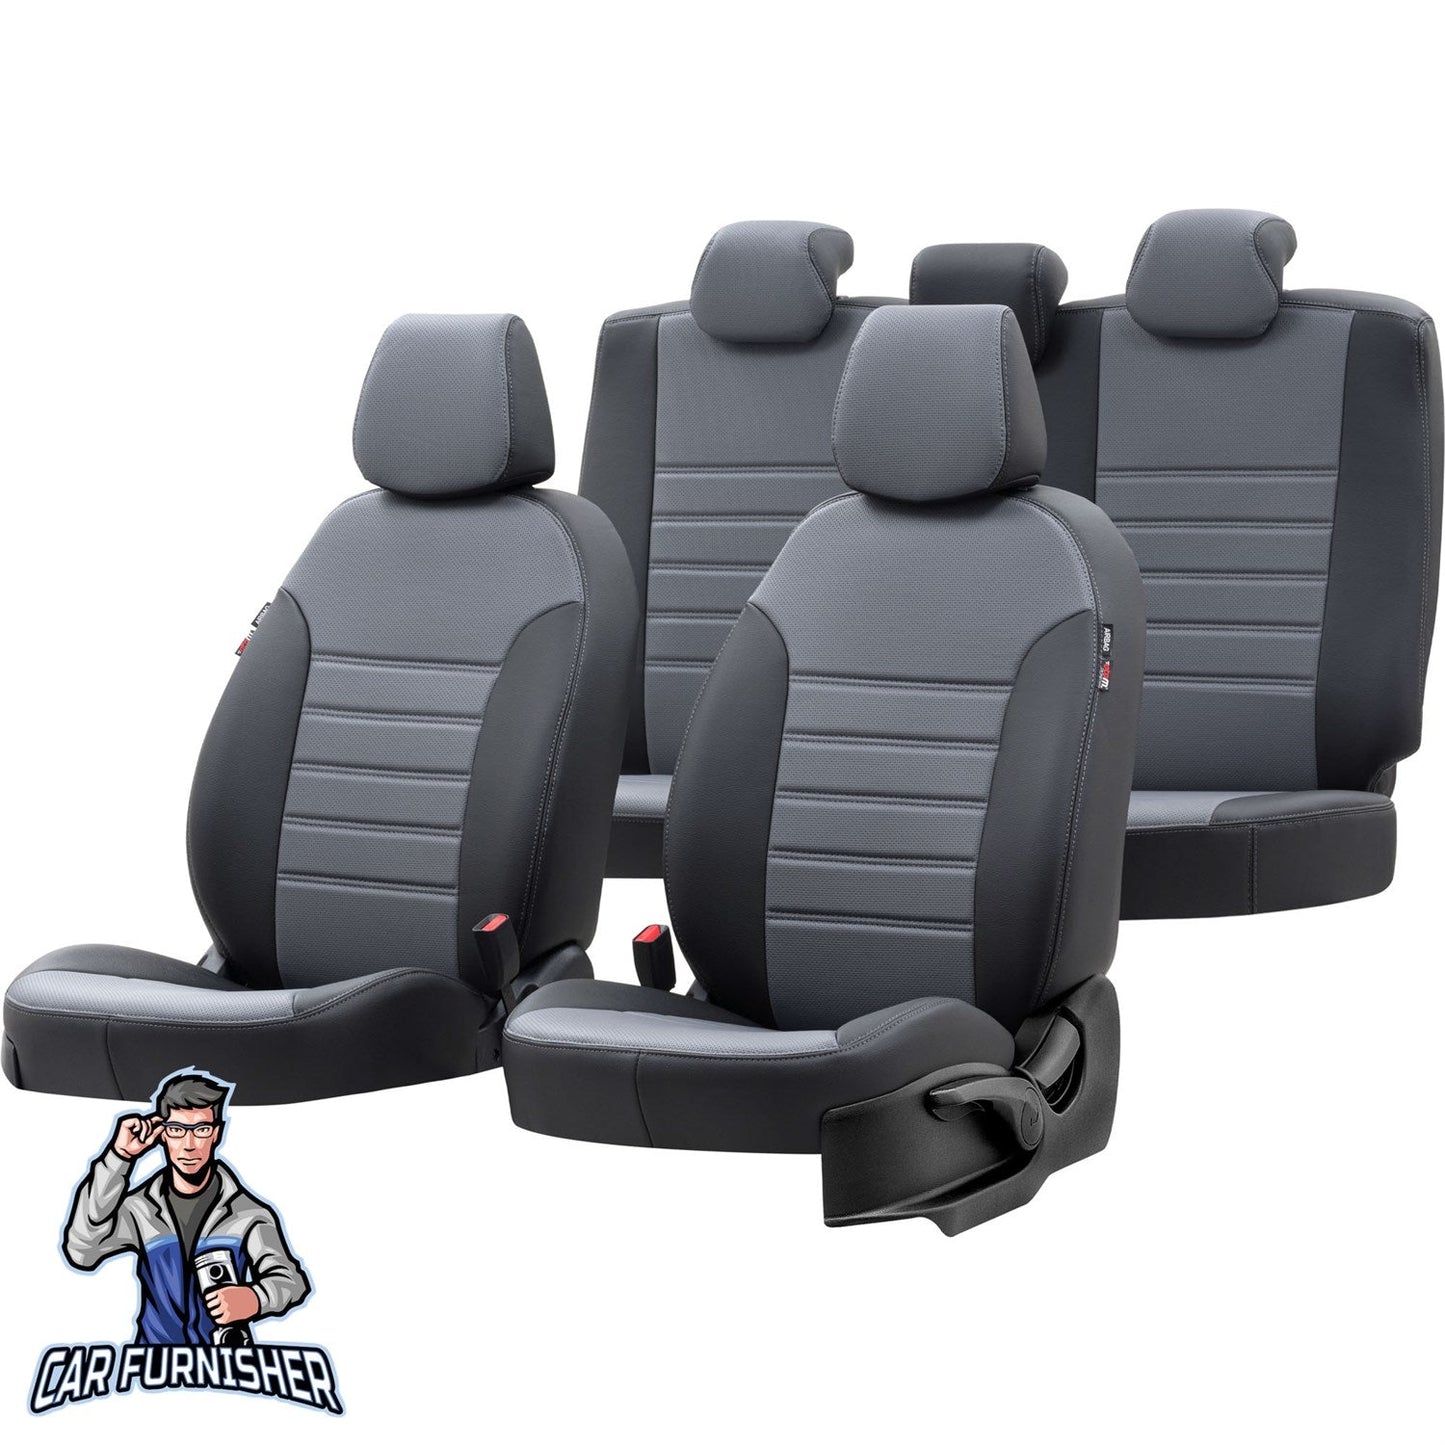 Toyota Rav4 Seat Cover New York Leather Design Smoked Black Leather